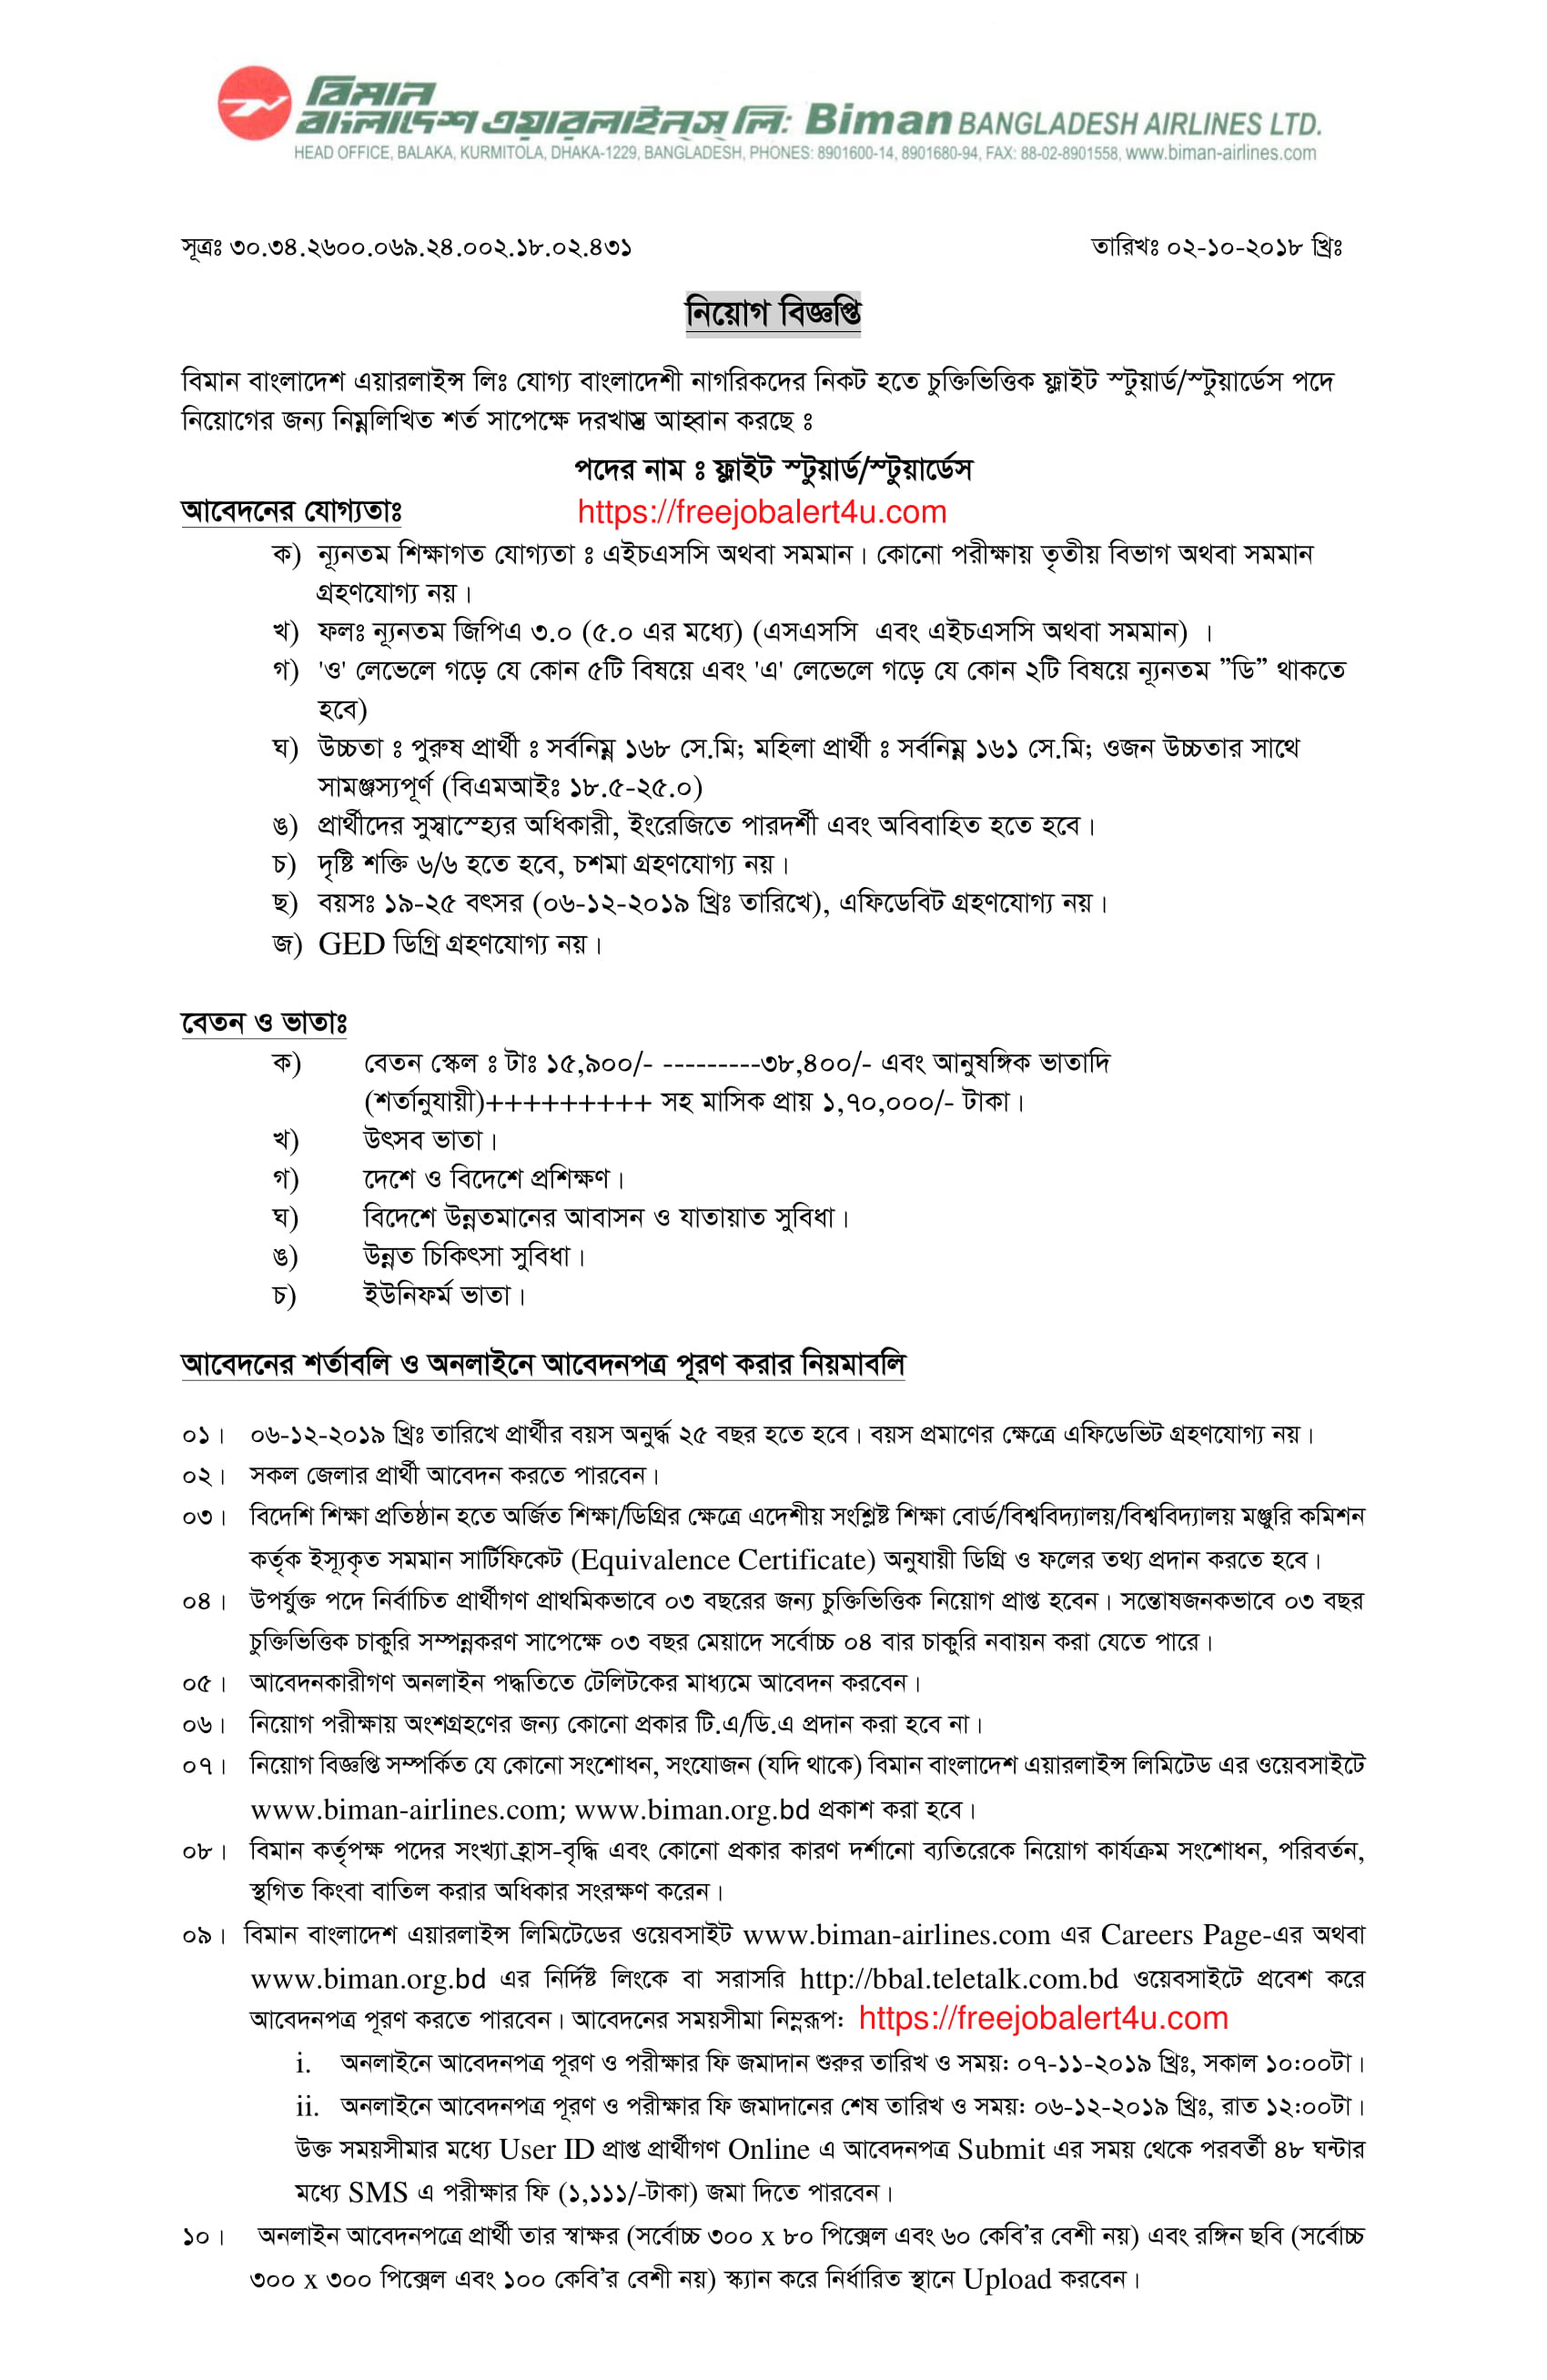 Biman Bangladesh Airlines New Job Circular 2019